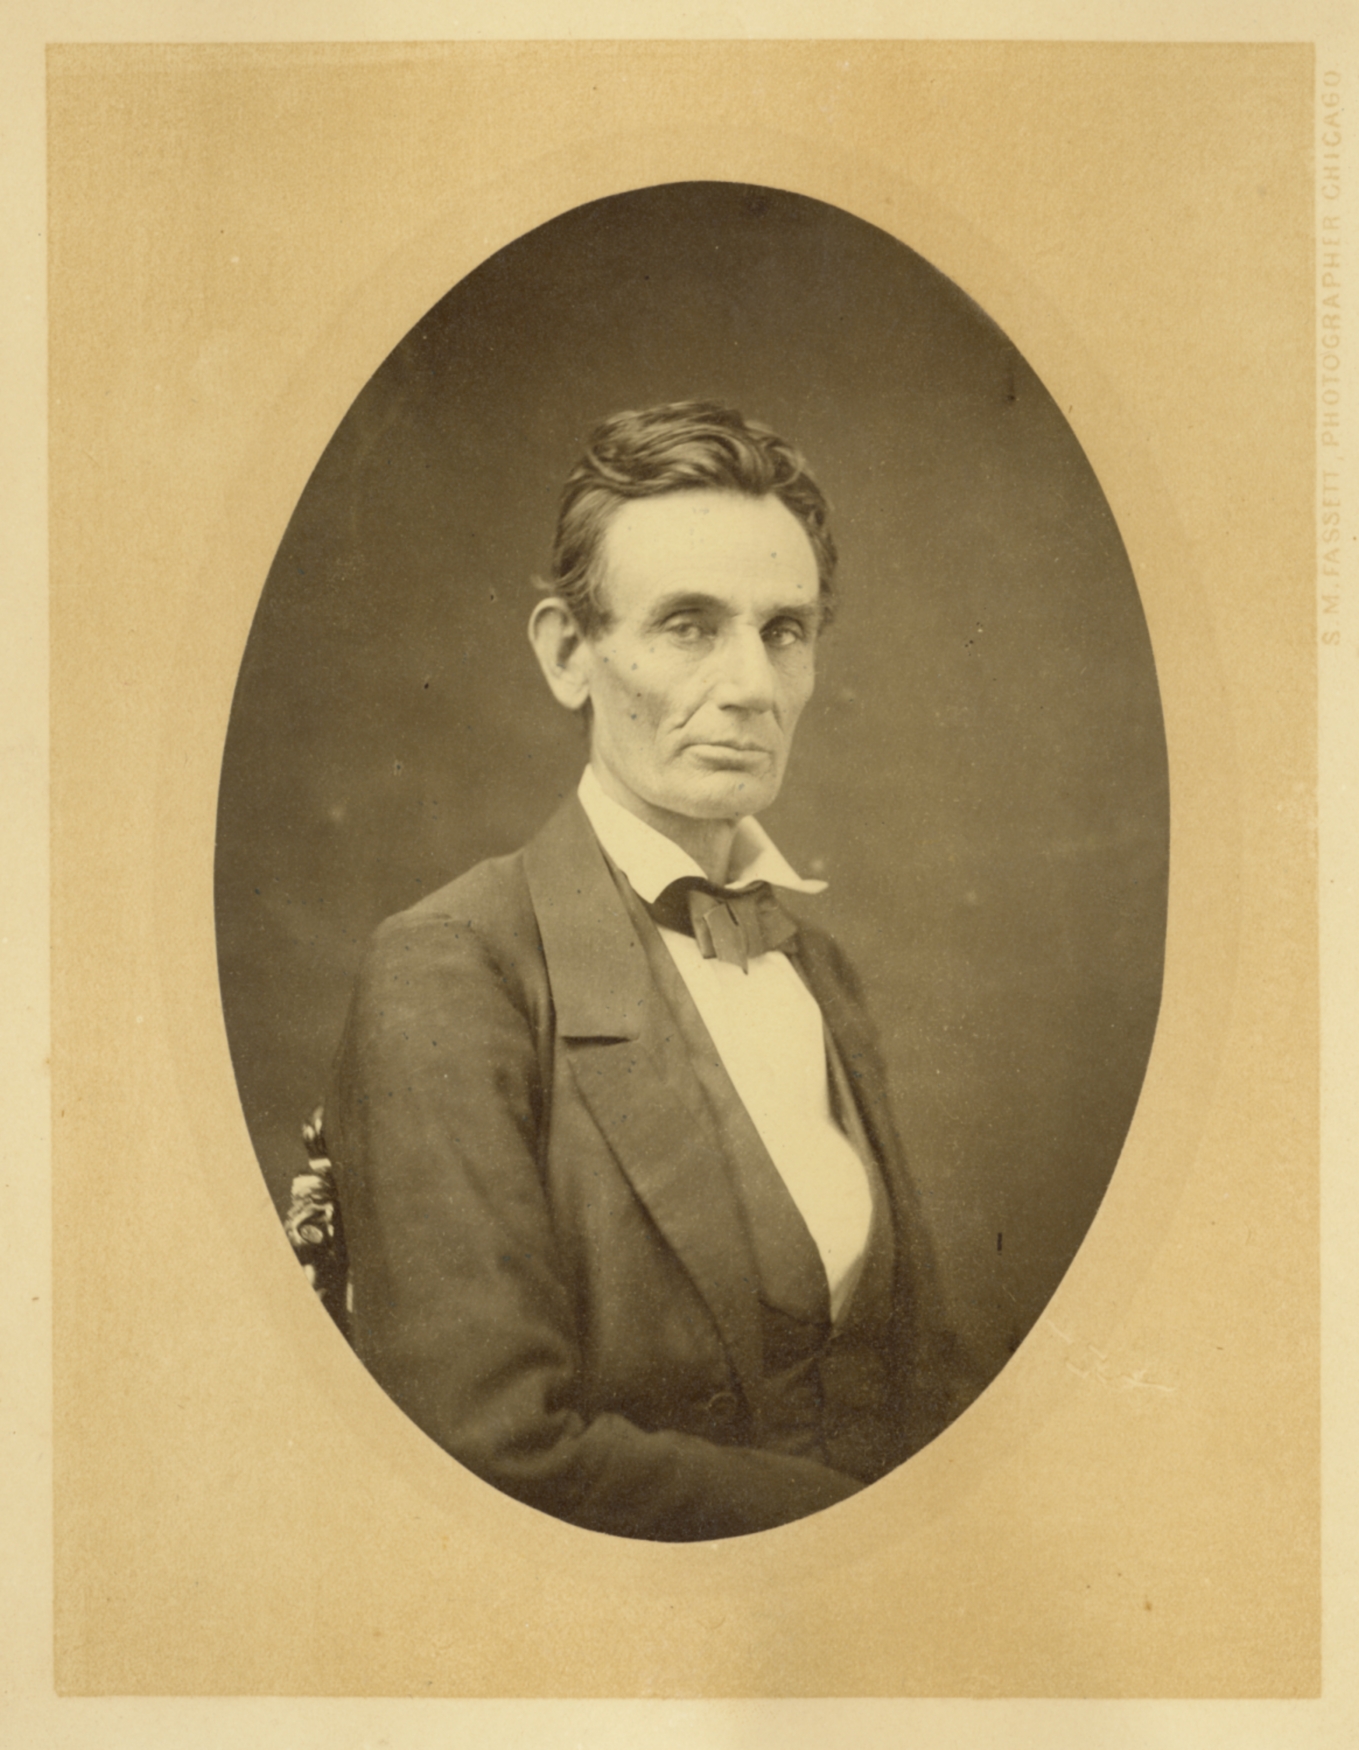 Samuel Fassett, Lincoln Portrait [Photograph of Abraham Lincoln], October 4, 1859, photograph, 19 x 13 cm (Newberry Library)